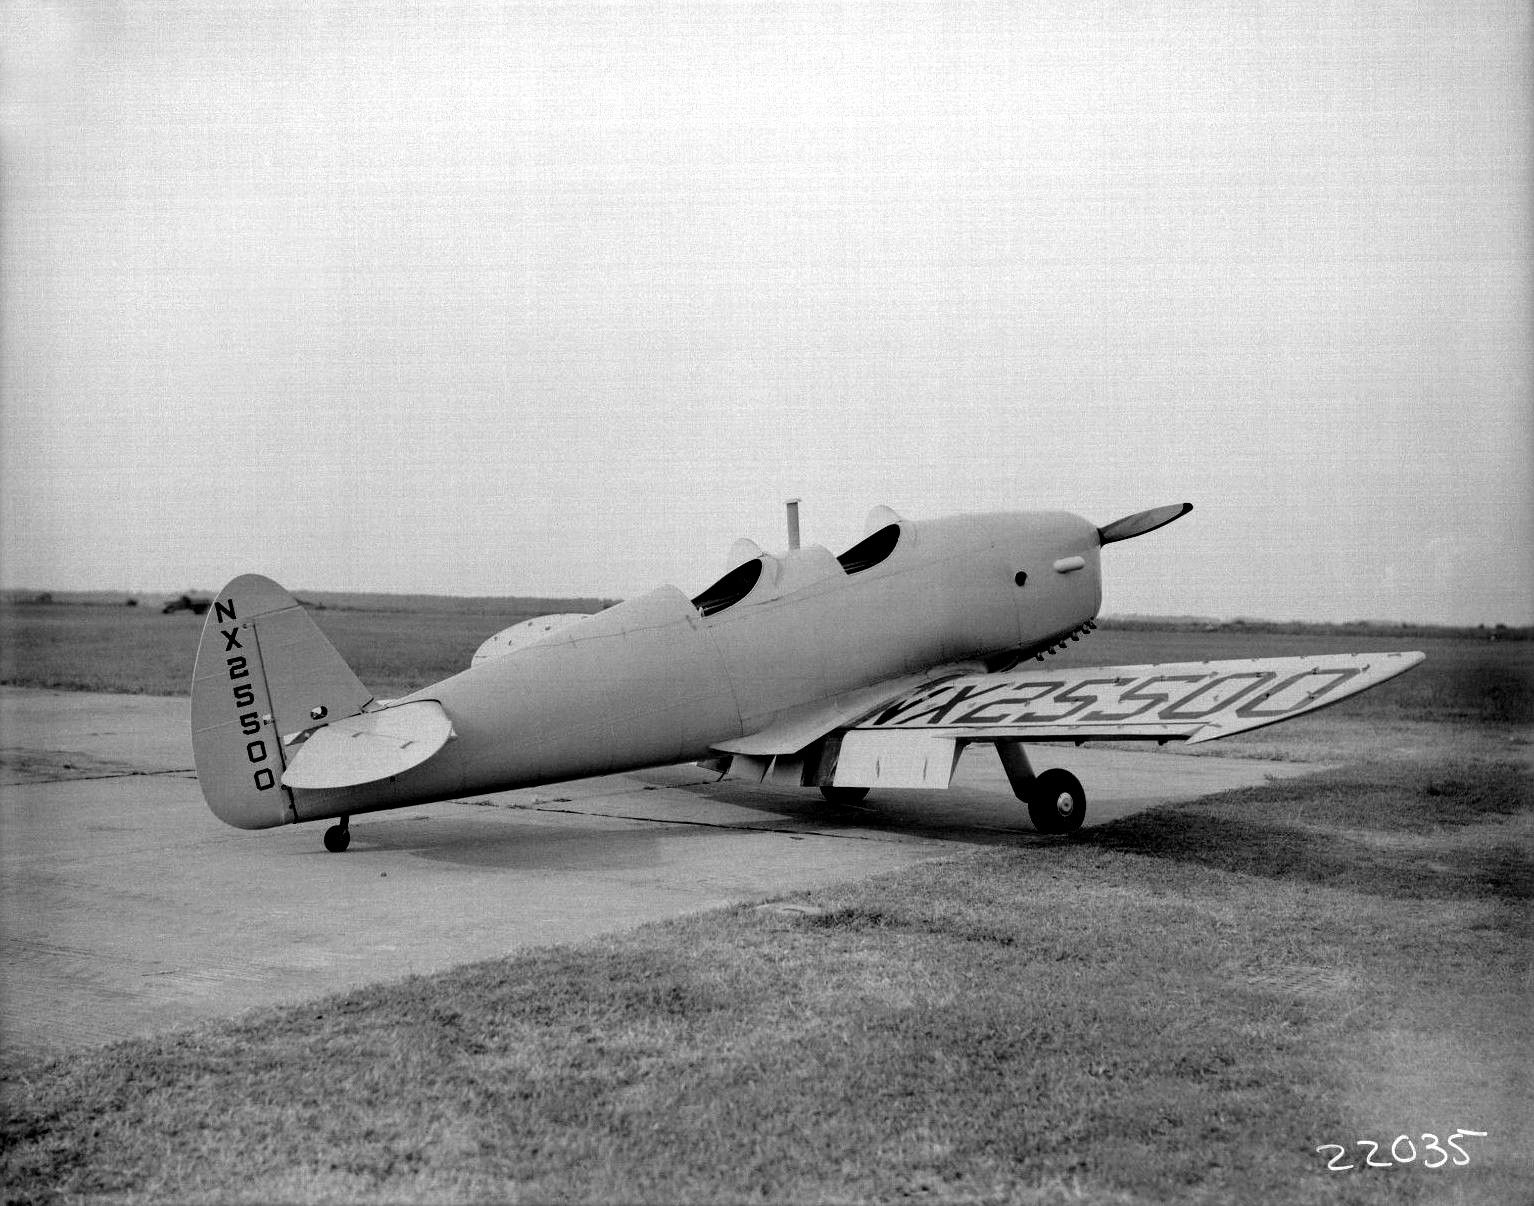 St_Louis_PT-LM-4_Trainer_24_September_1940_at_NASA_Langley